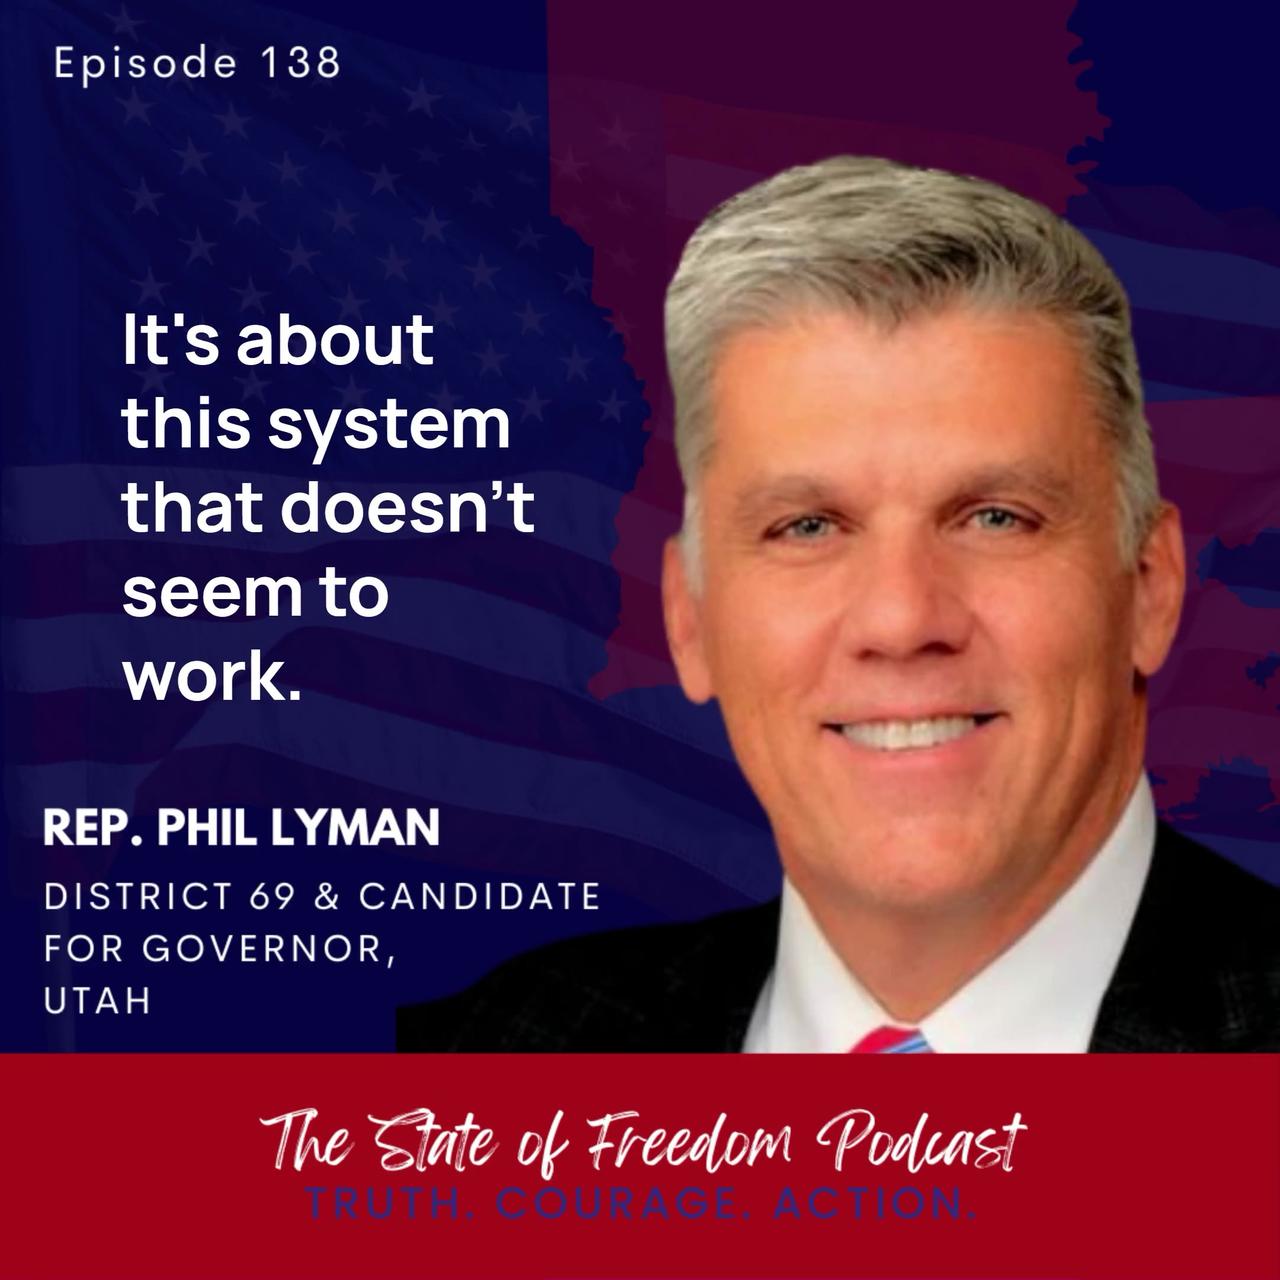 Rep. Phil Lyman (UT-69) - it's a systems problem